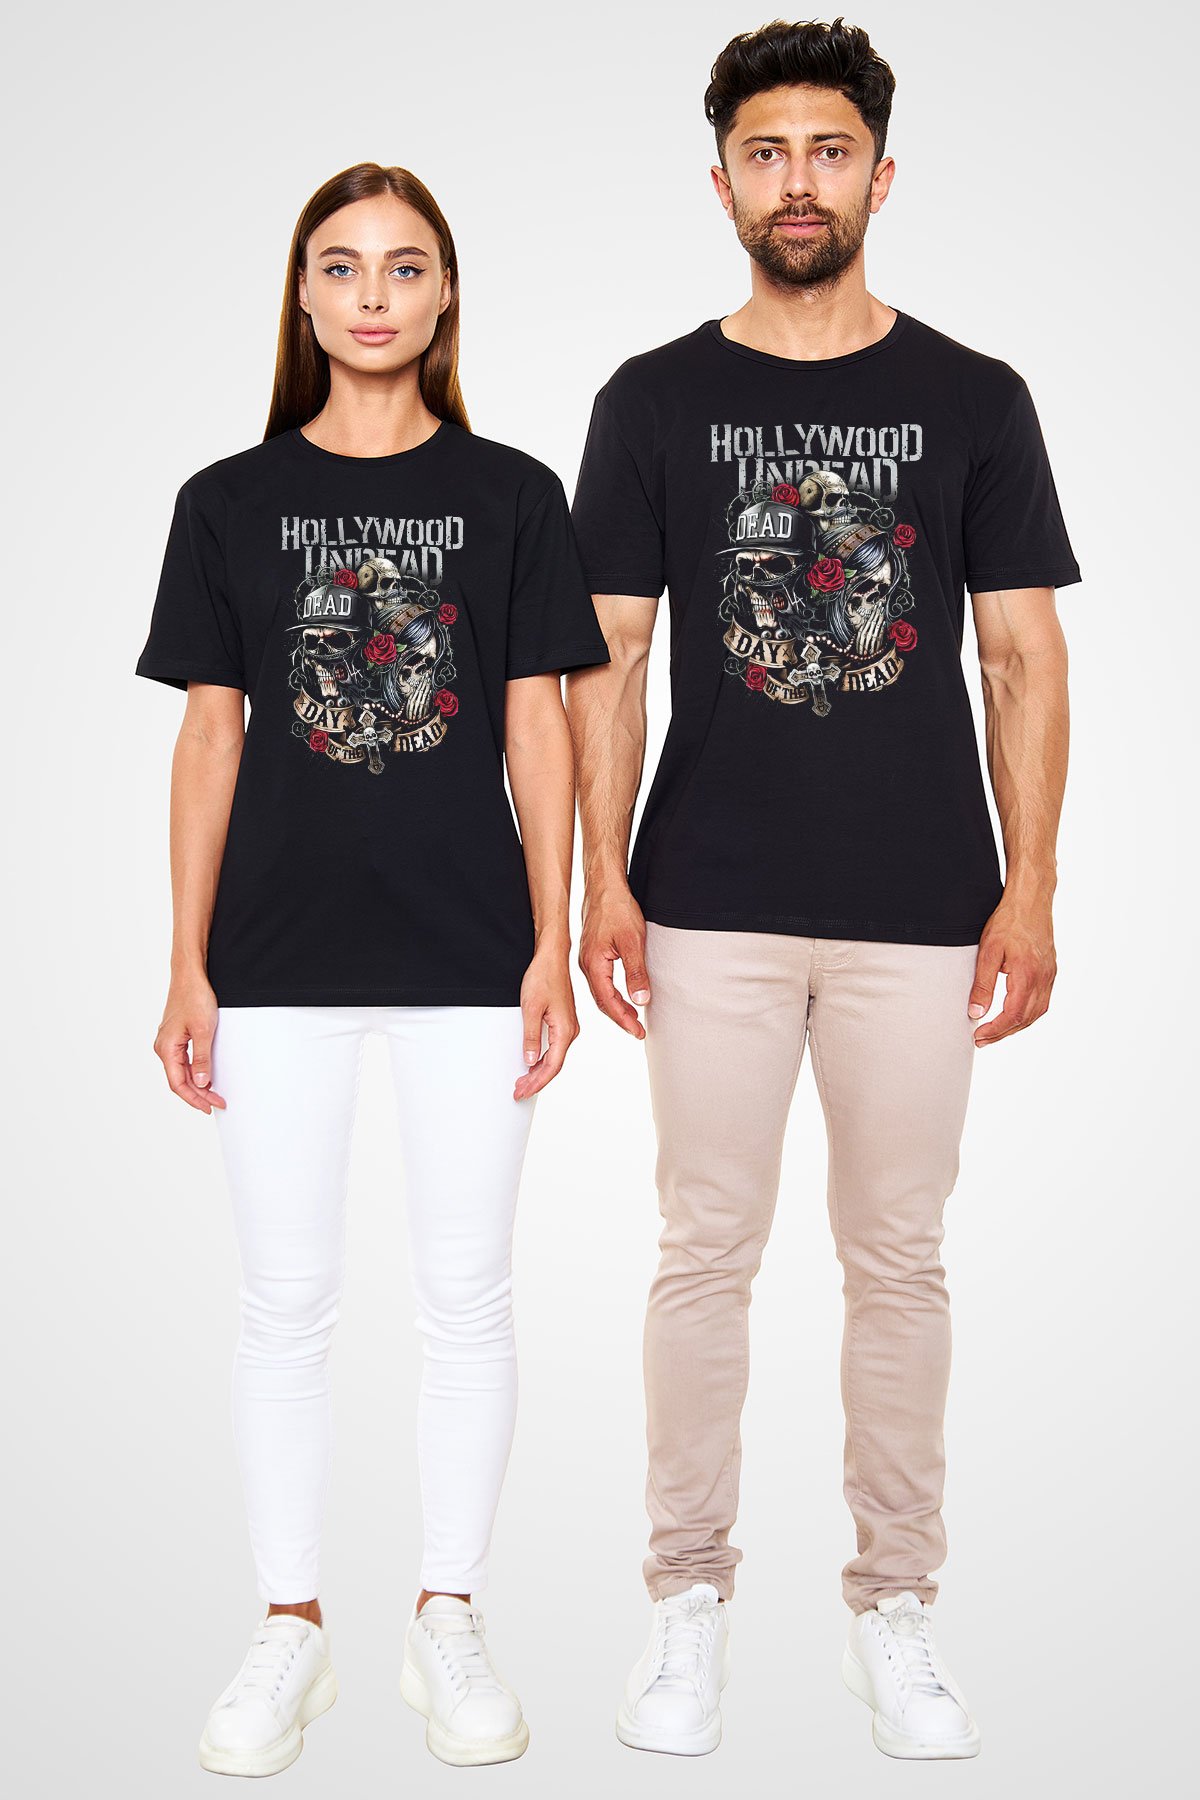 Hollywood Undead Black Unisex T-Shirt - Tees - Shirts